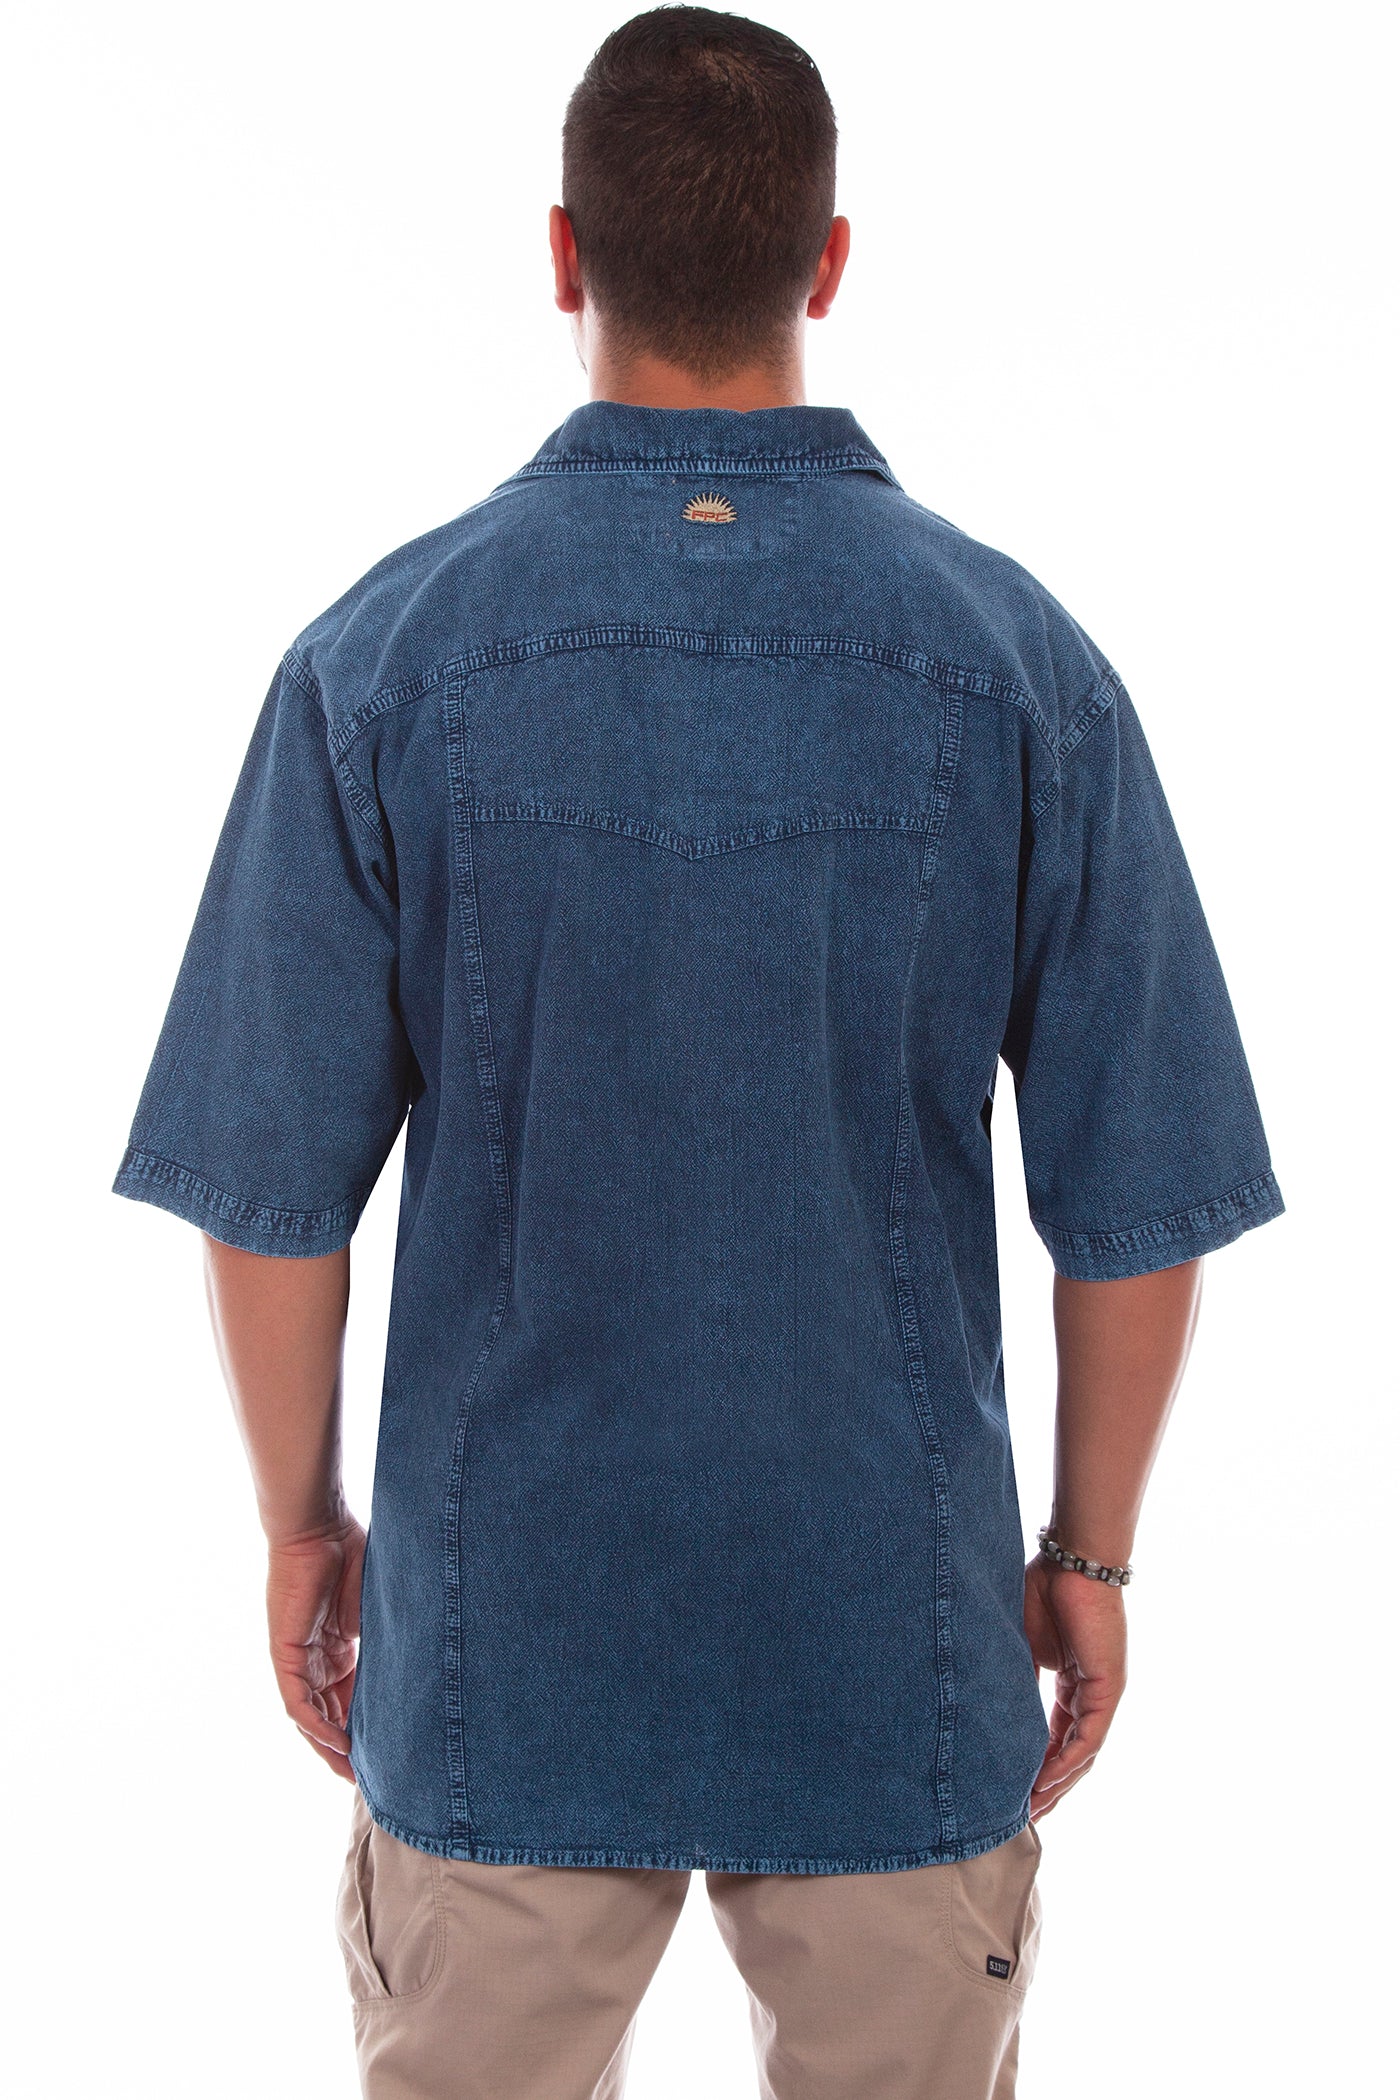 Men's Trac Shirt Denim